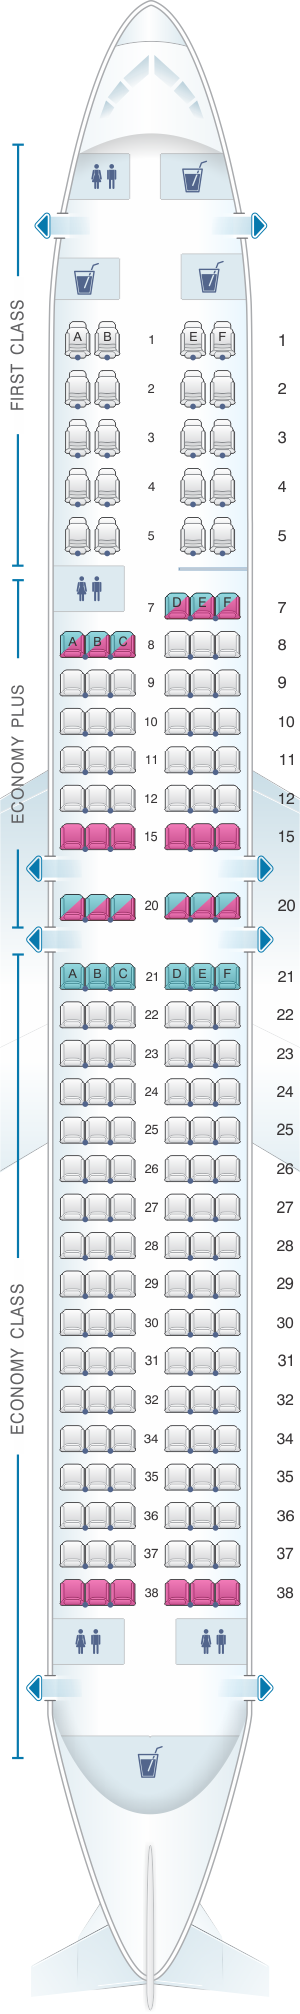 boeing 737 900 seating united